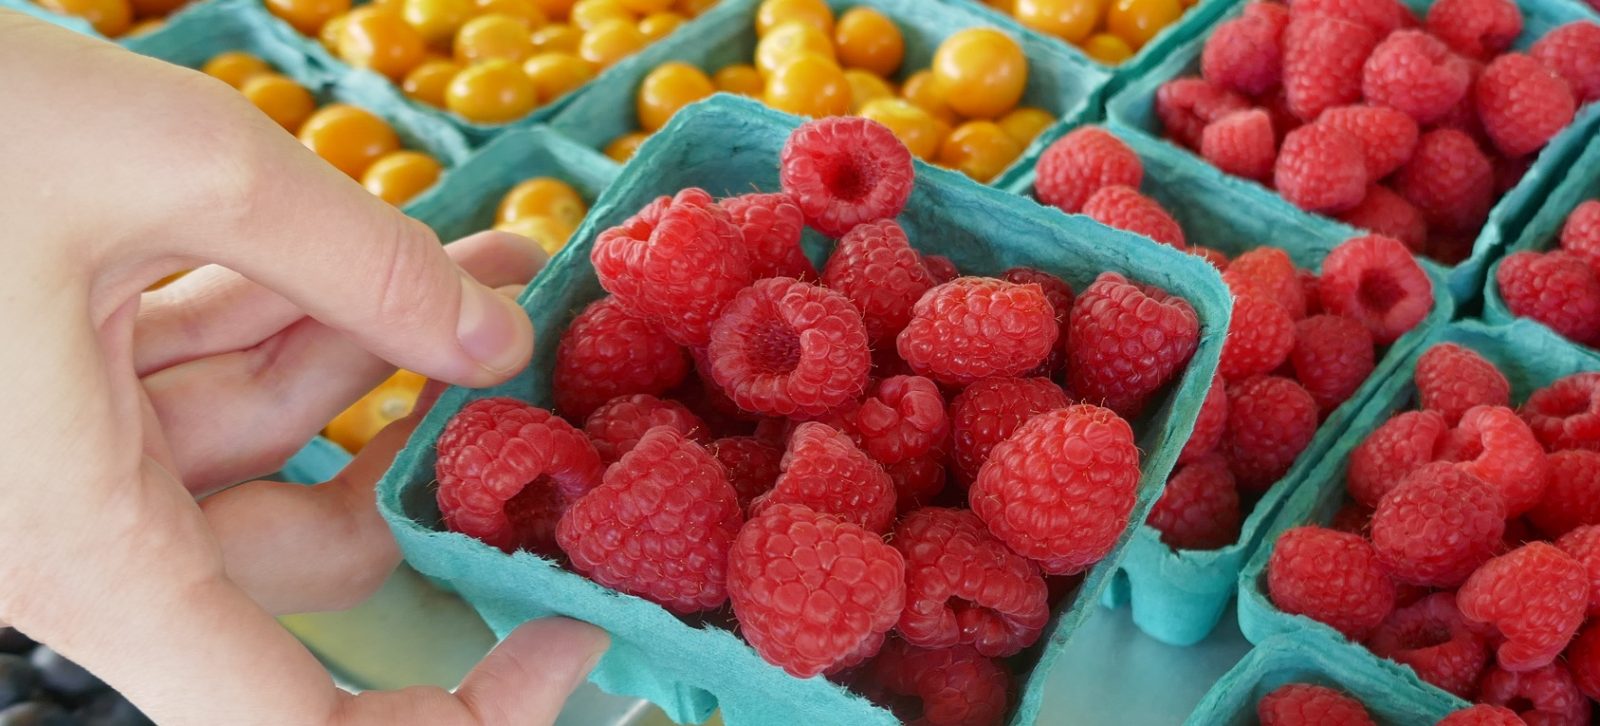 Raspberries are part of The Dental Diet